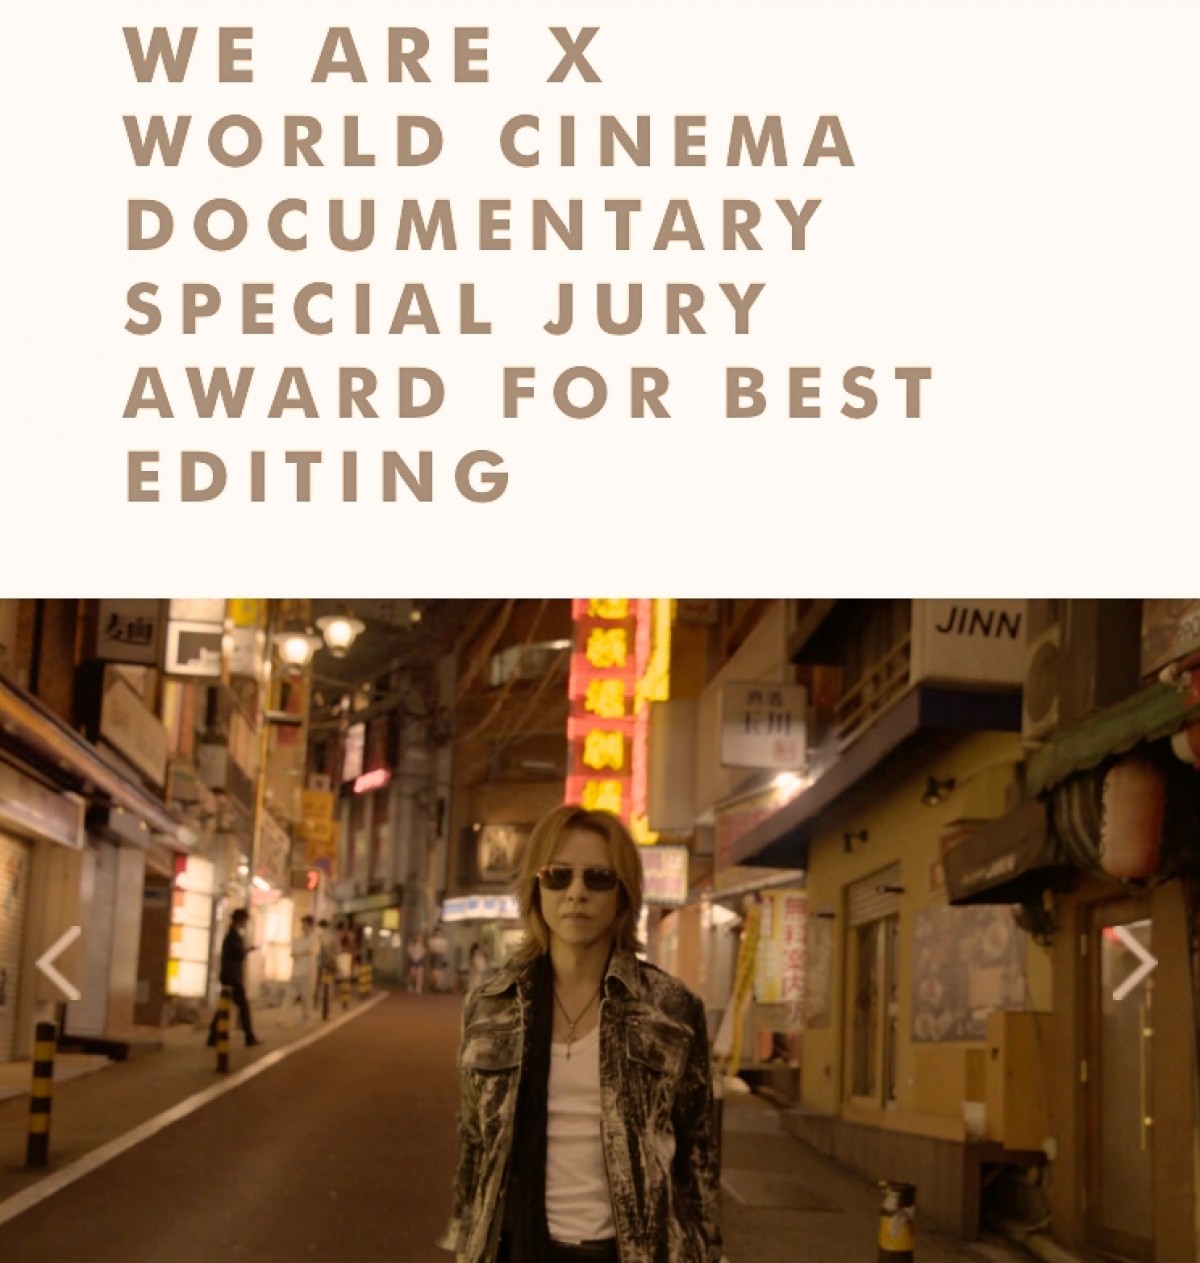 YOSHIKI、『WE ARE X』サンダンス映画祭で編集賞受賞「新たな道が開ける」